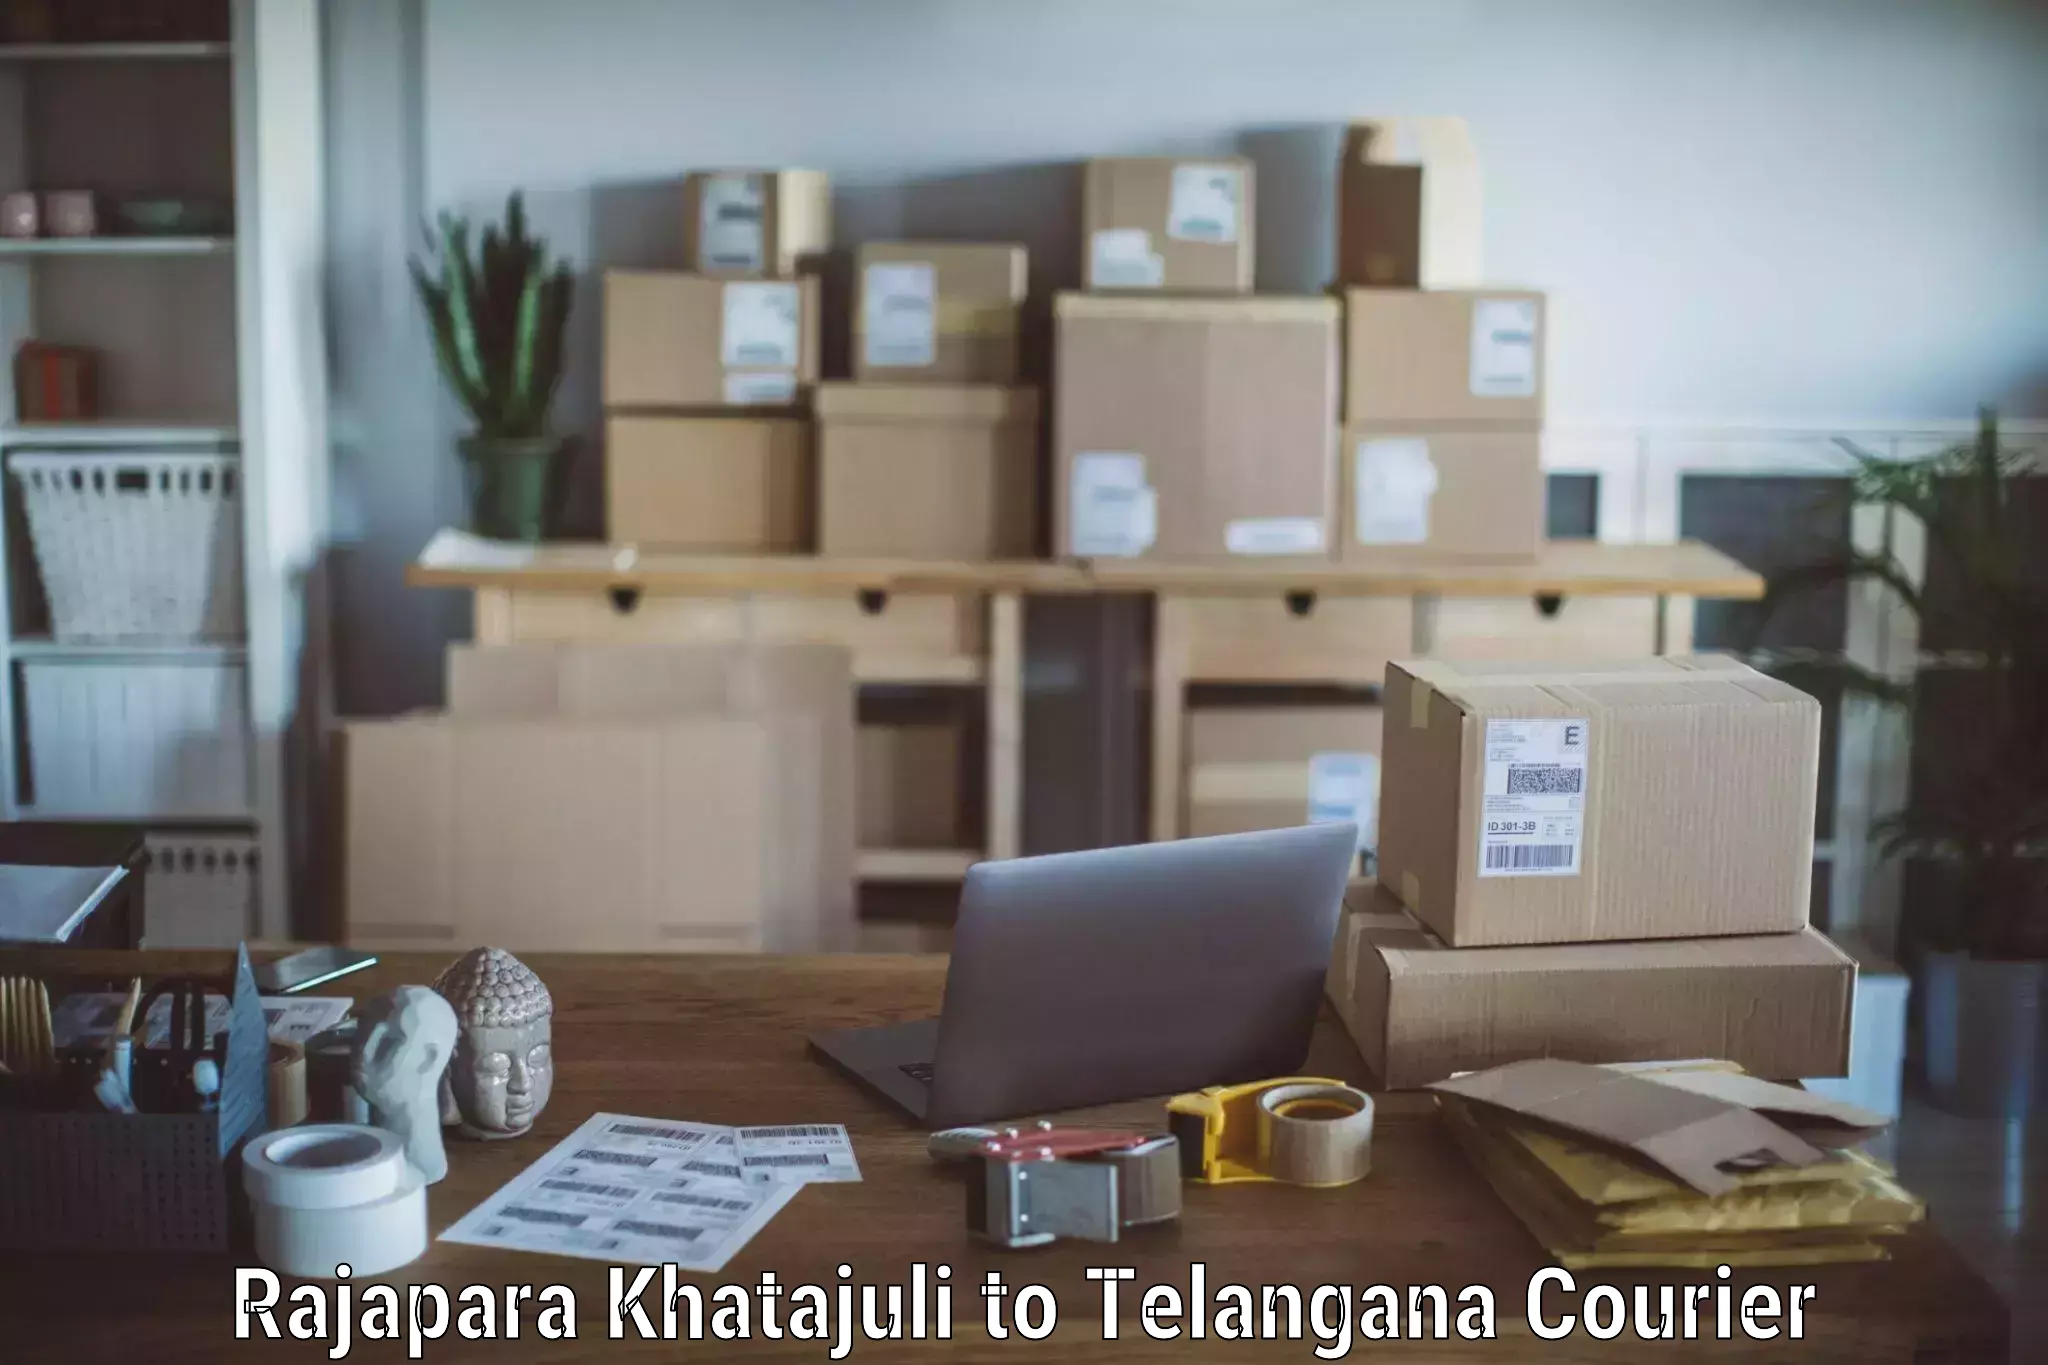 Professional moving assistance in Rajapara Khatajuli to Kamalapur